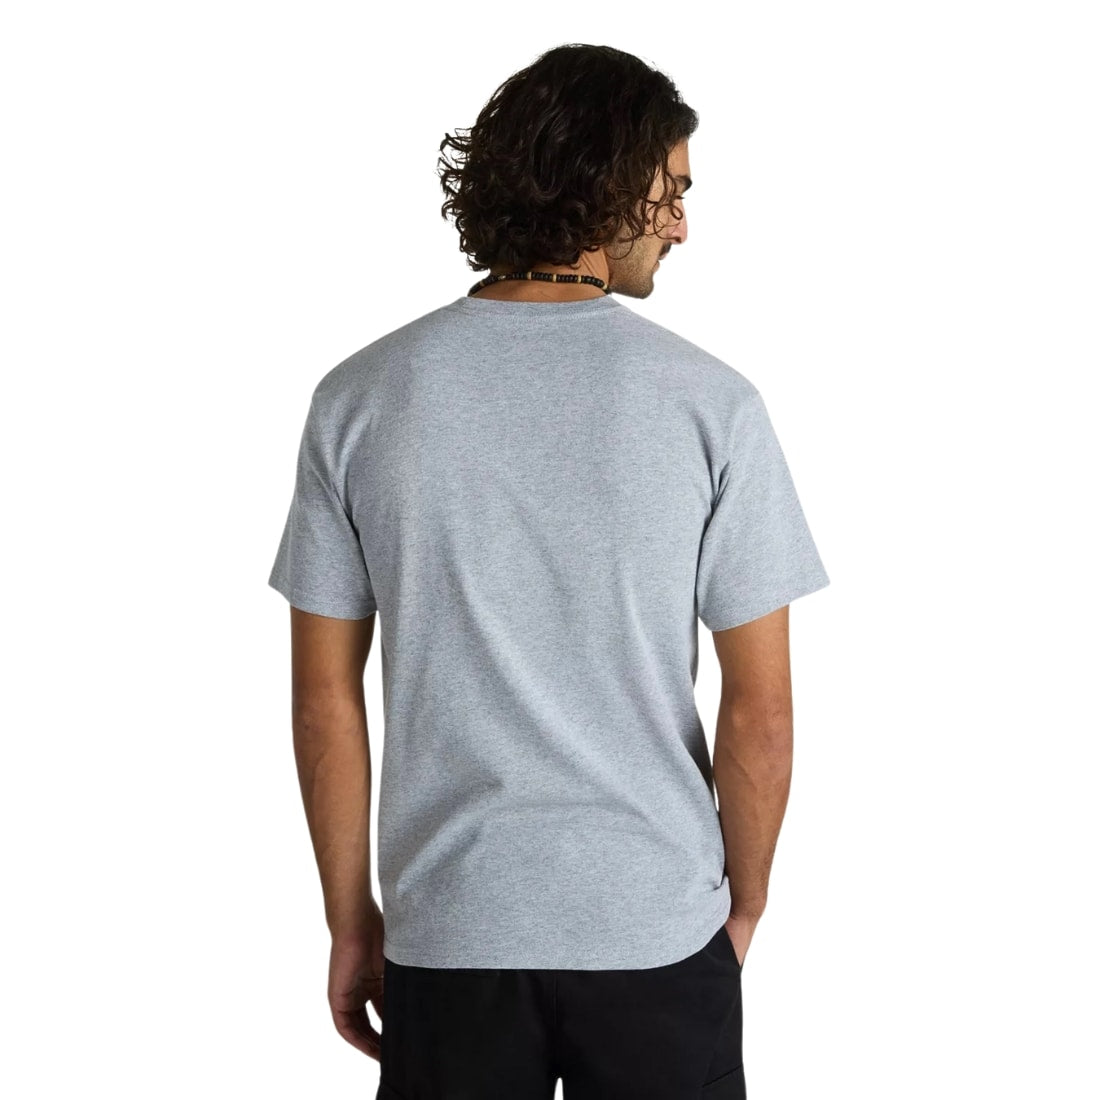 Vans Skate Classics T-Shirt - Grey Heather - Mens Graphic T-Shirt by Vans